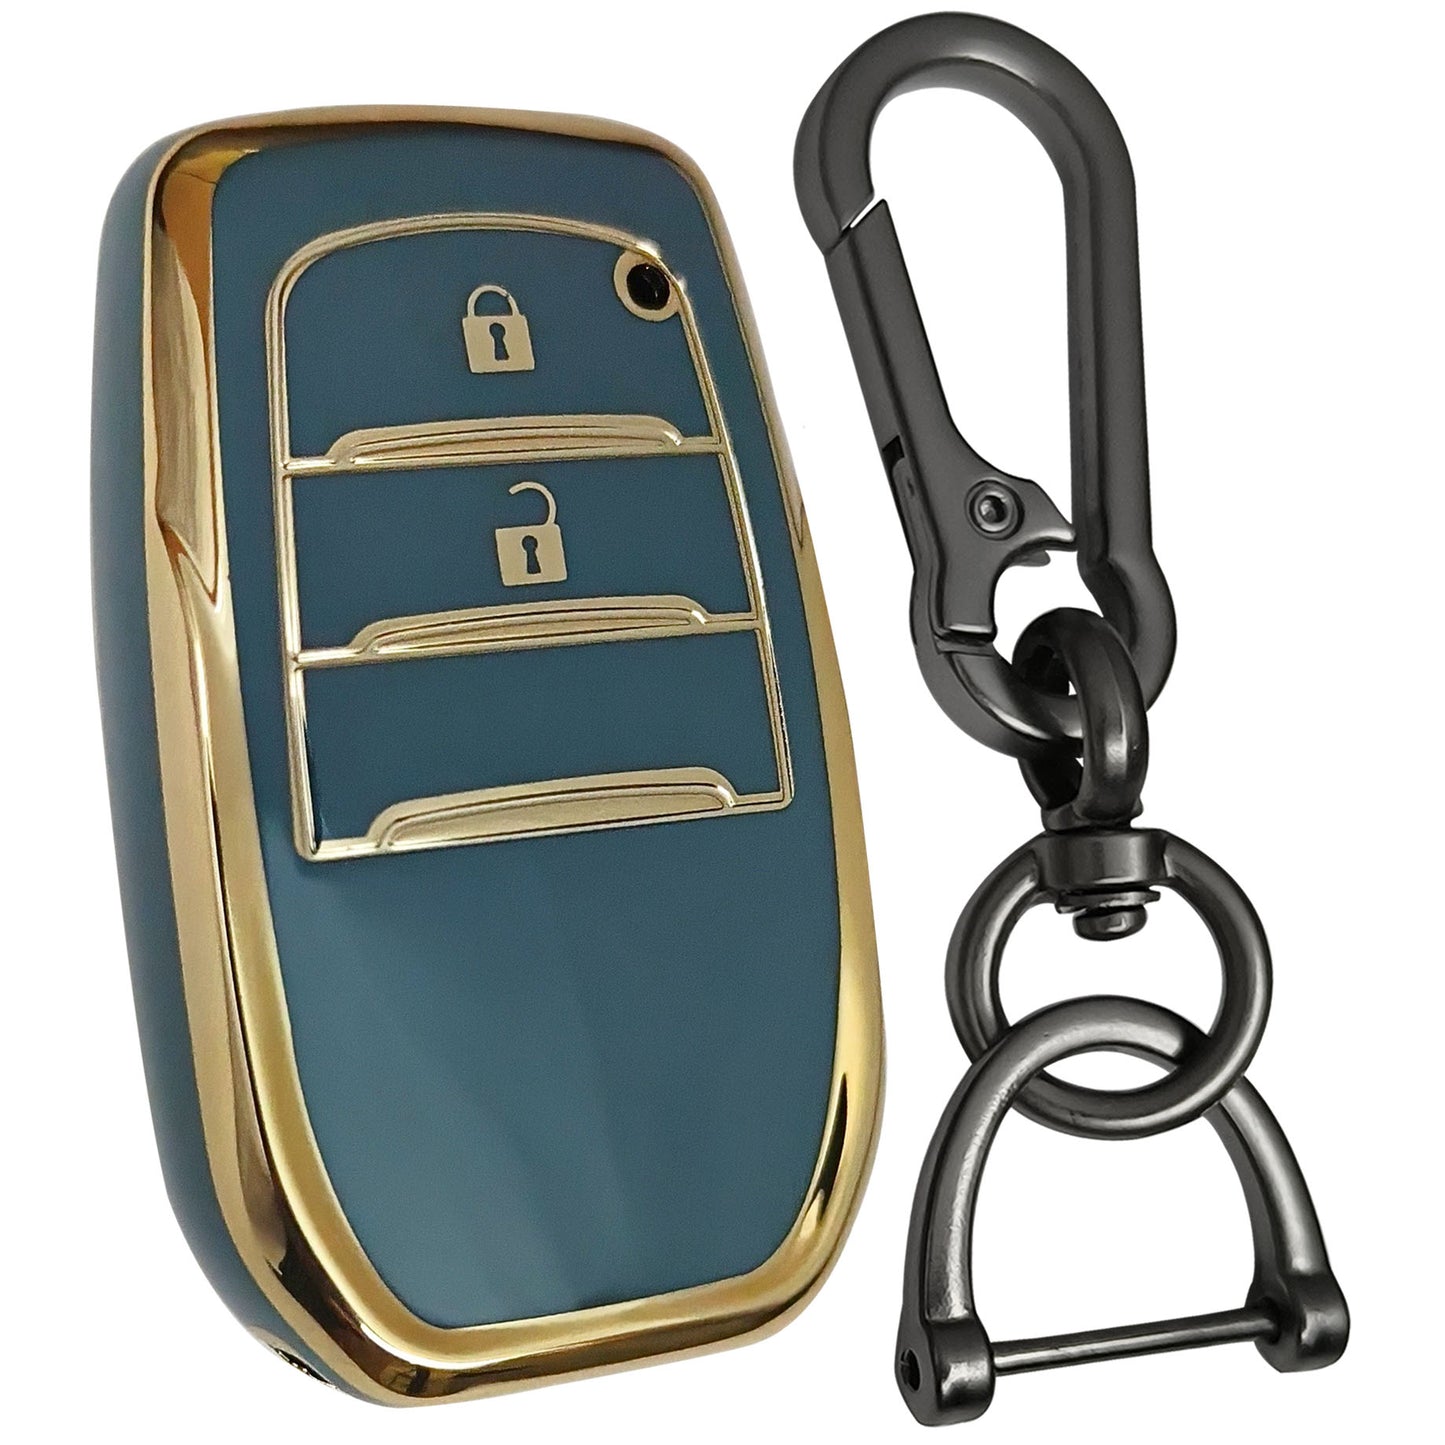 toyota fortuner innova crysta 2b smart tpu blue key cover case keychain